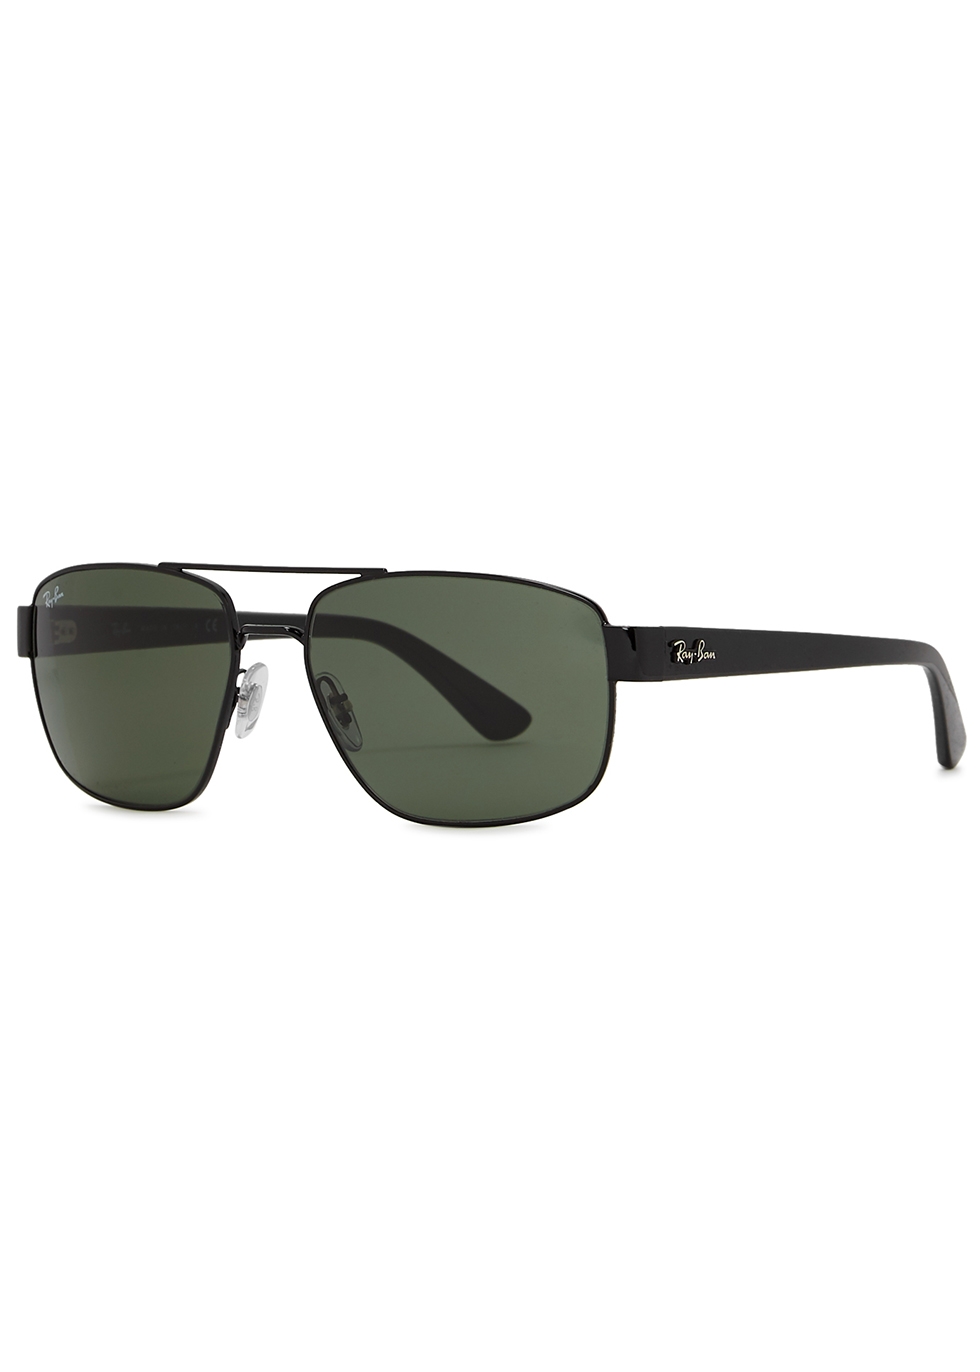 Ray-Ban Black aviator sunglasses 